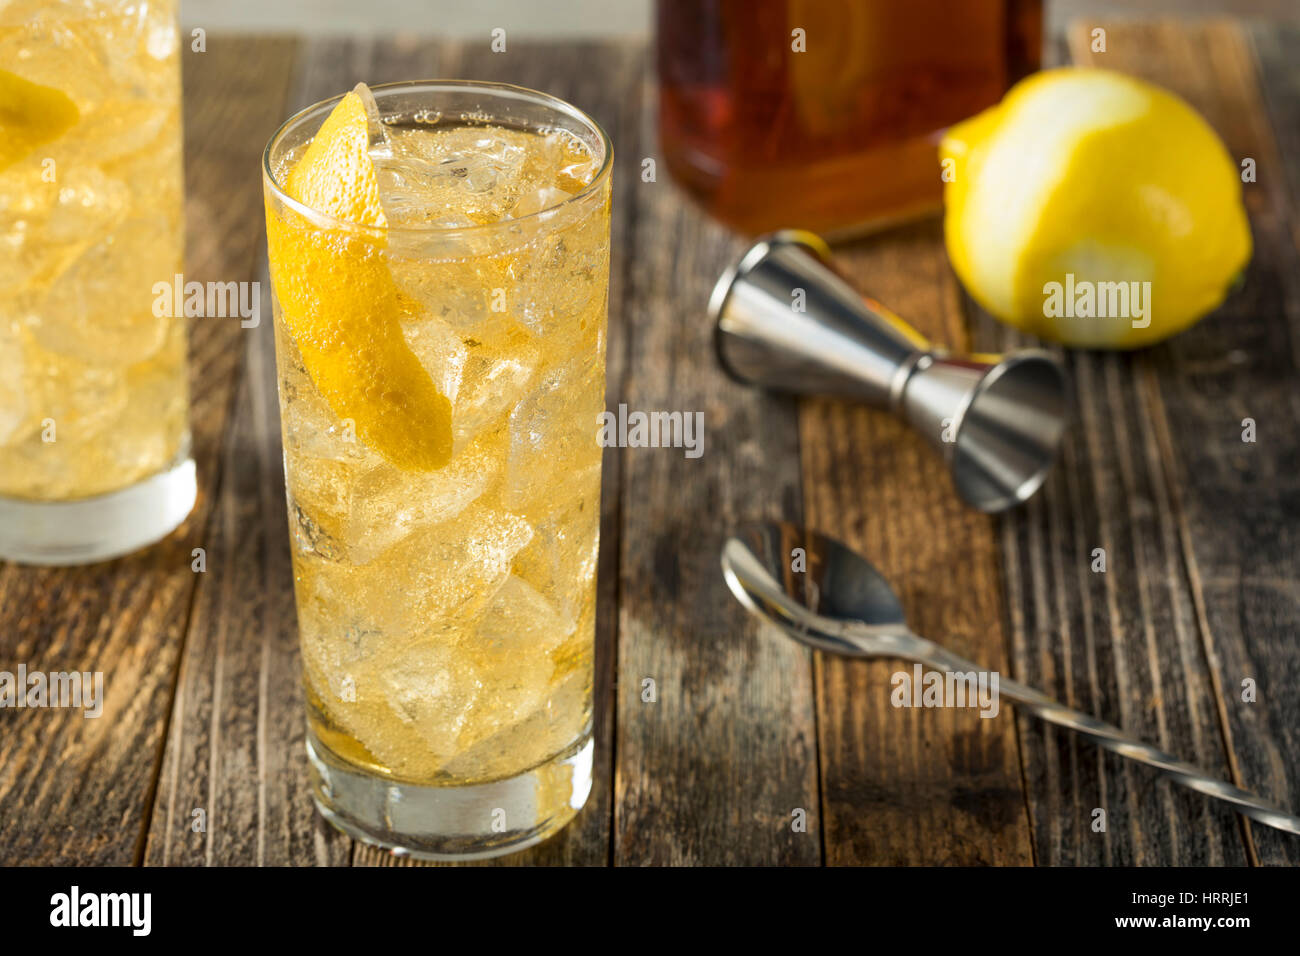 https://c8.alamy.com/comp/HRRJE1/homemade-whiskey-highball-with-soda-water-and-lemon-HRRJE1.jpg